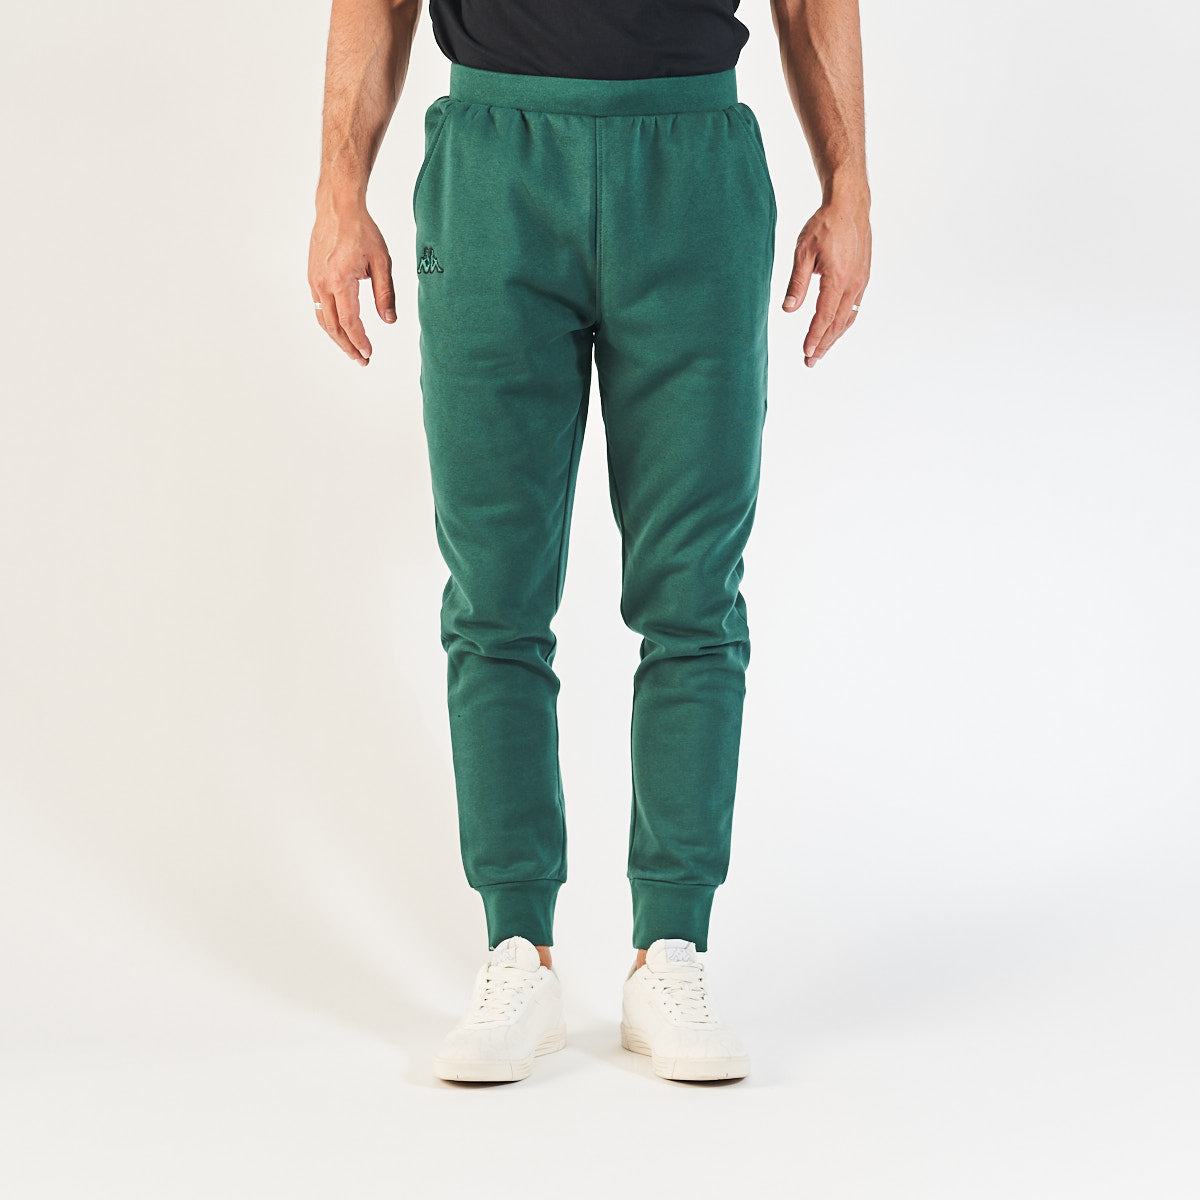 Pantalon Zant vert homme - Image 1